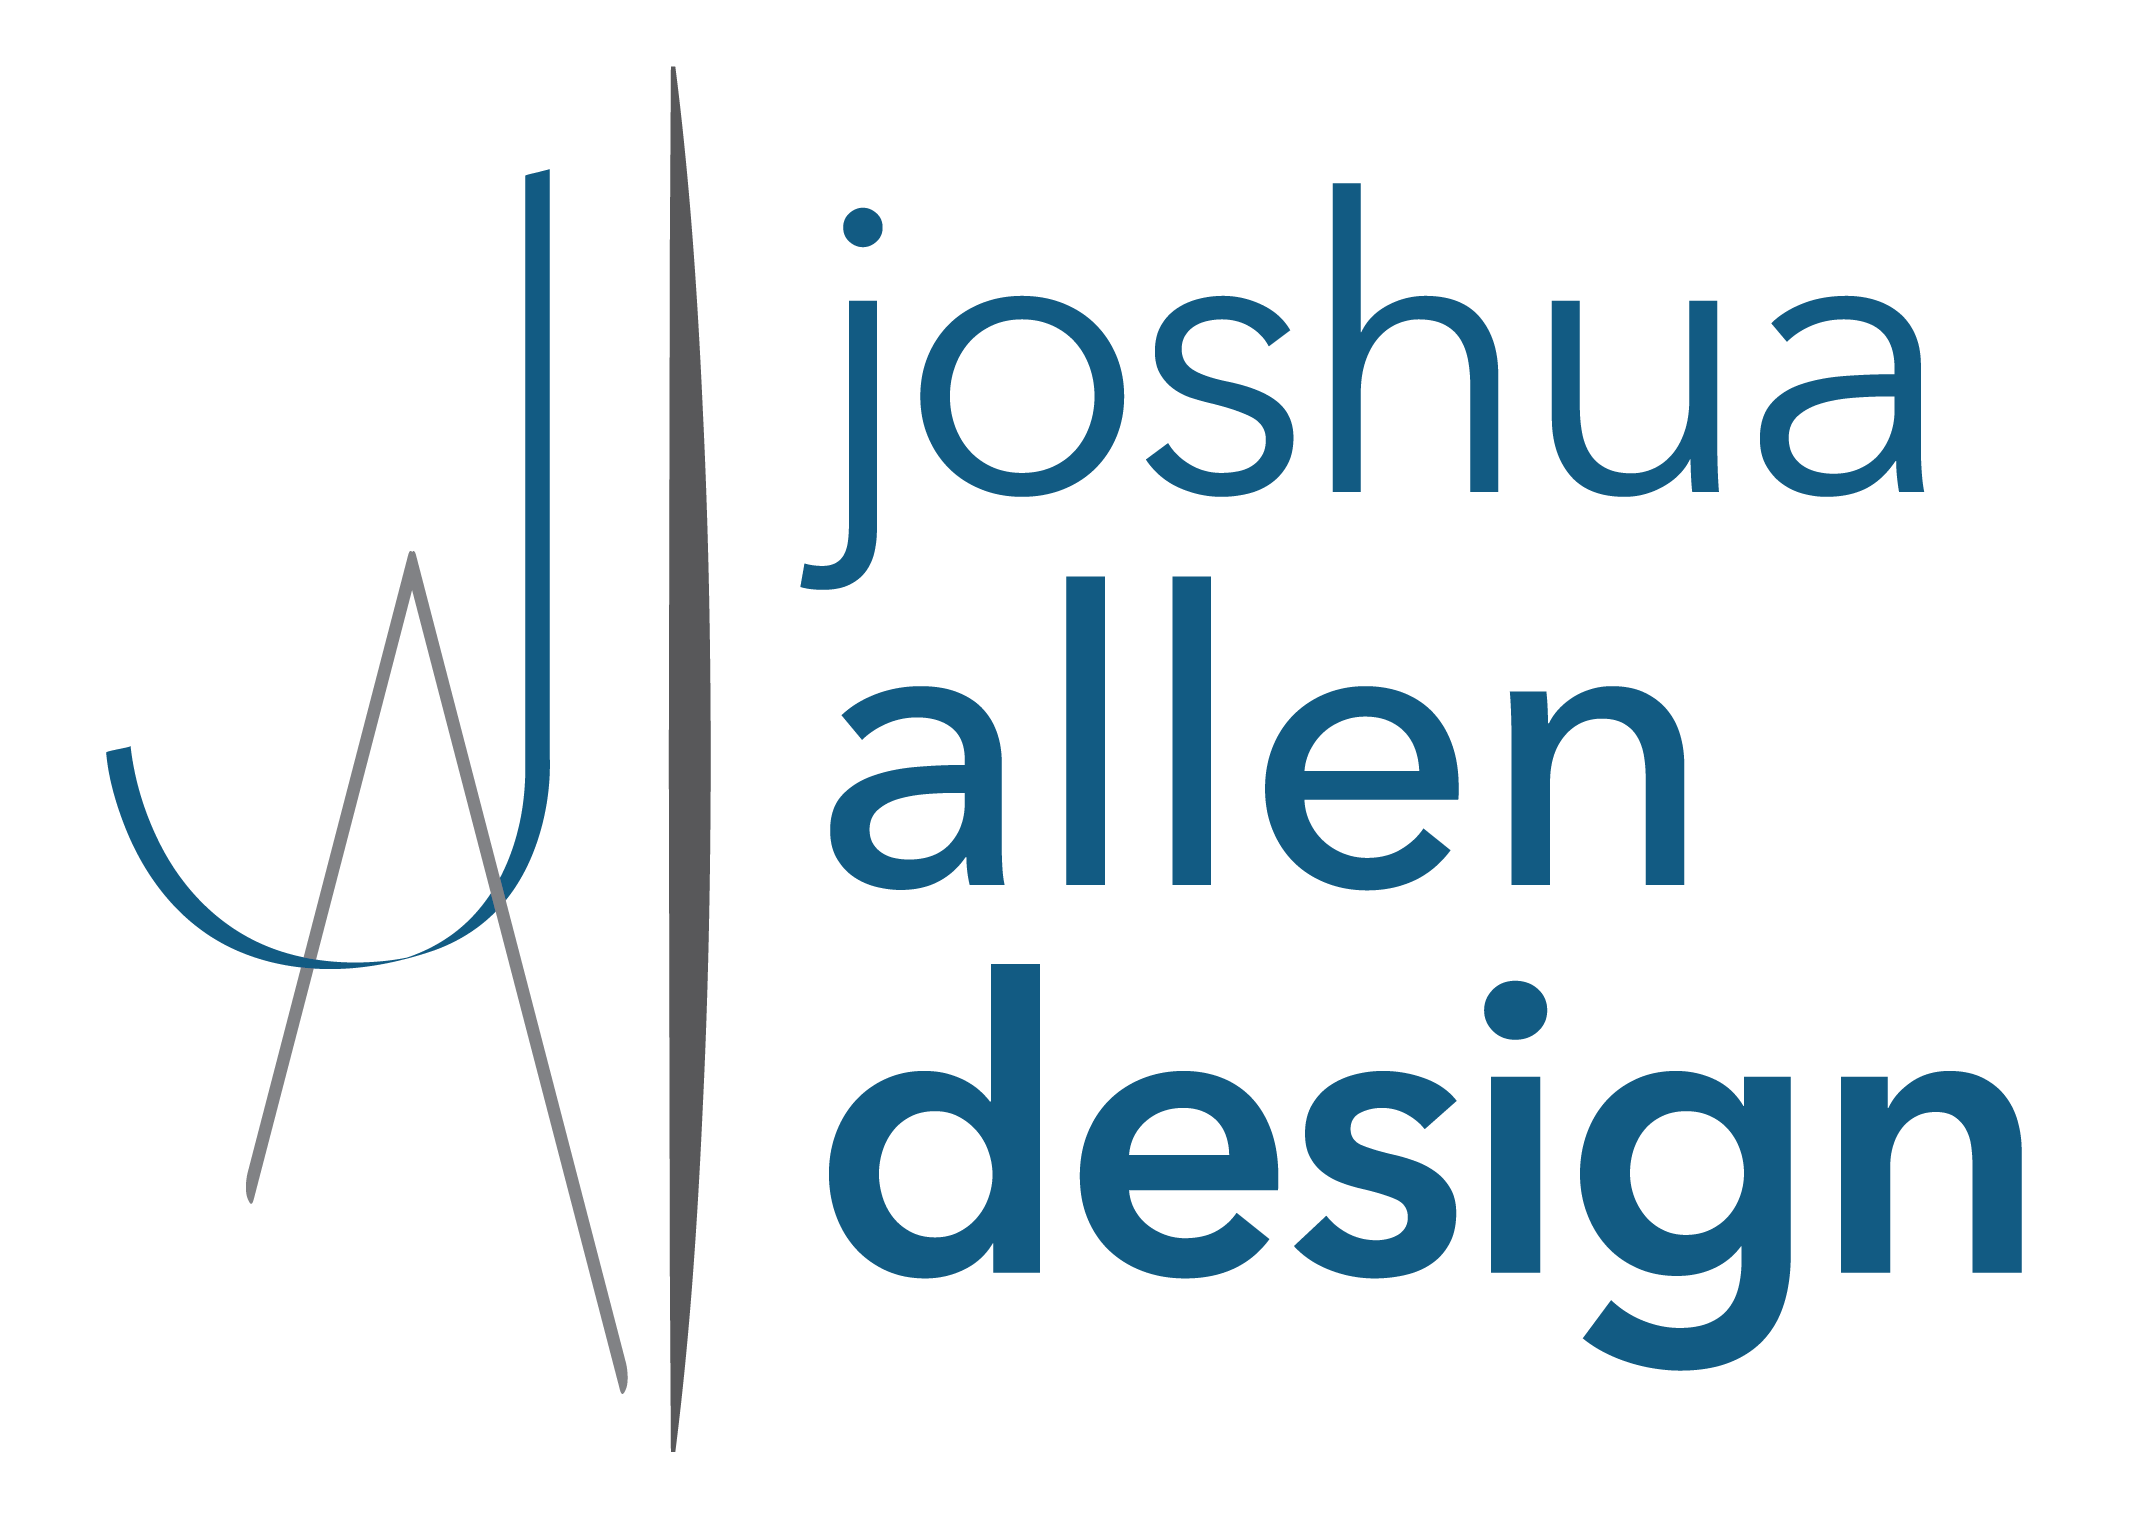 Operation Joshua Allen Design